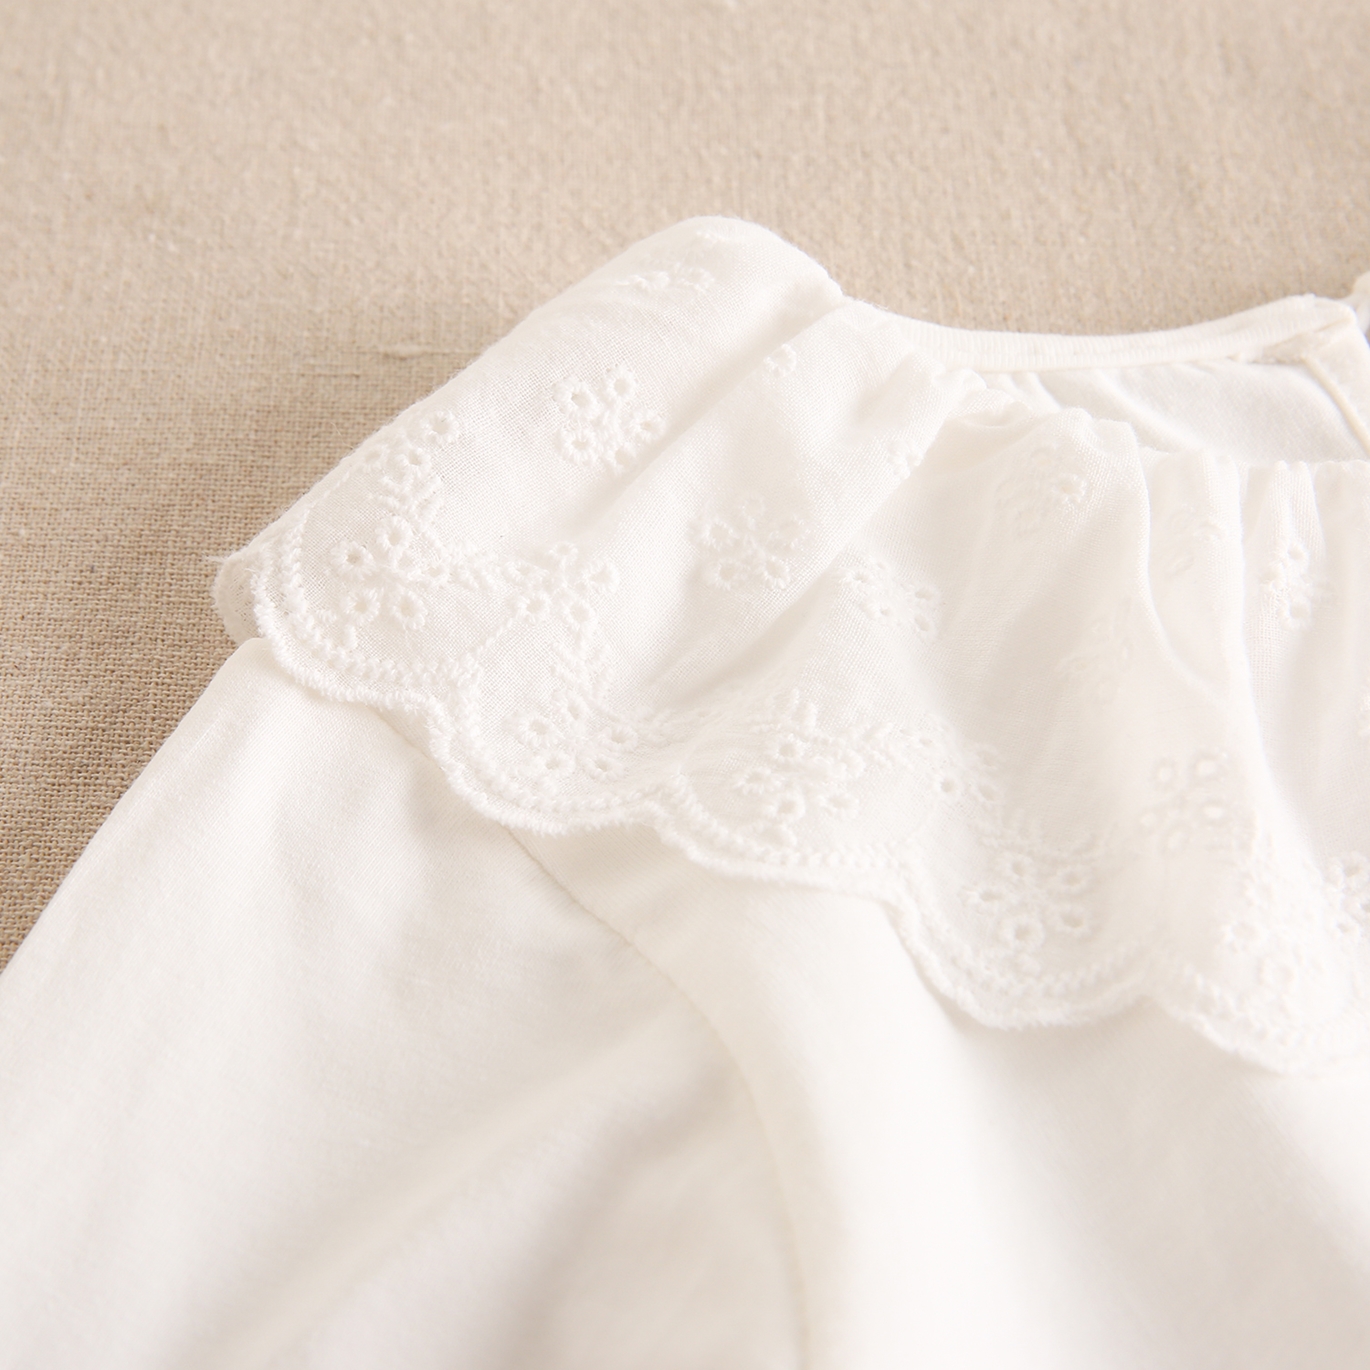 Imagen de Camiseta de niña de manga larga blanca con cuello volante de encaje